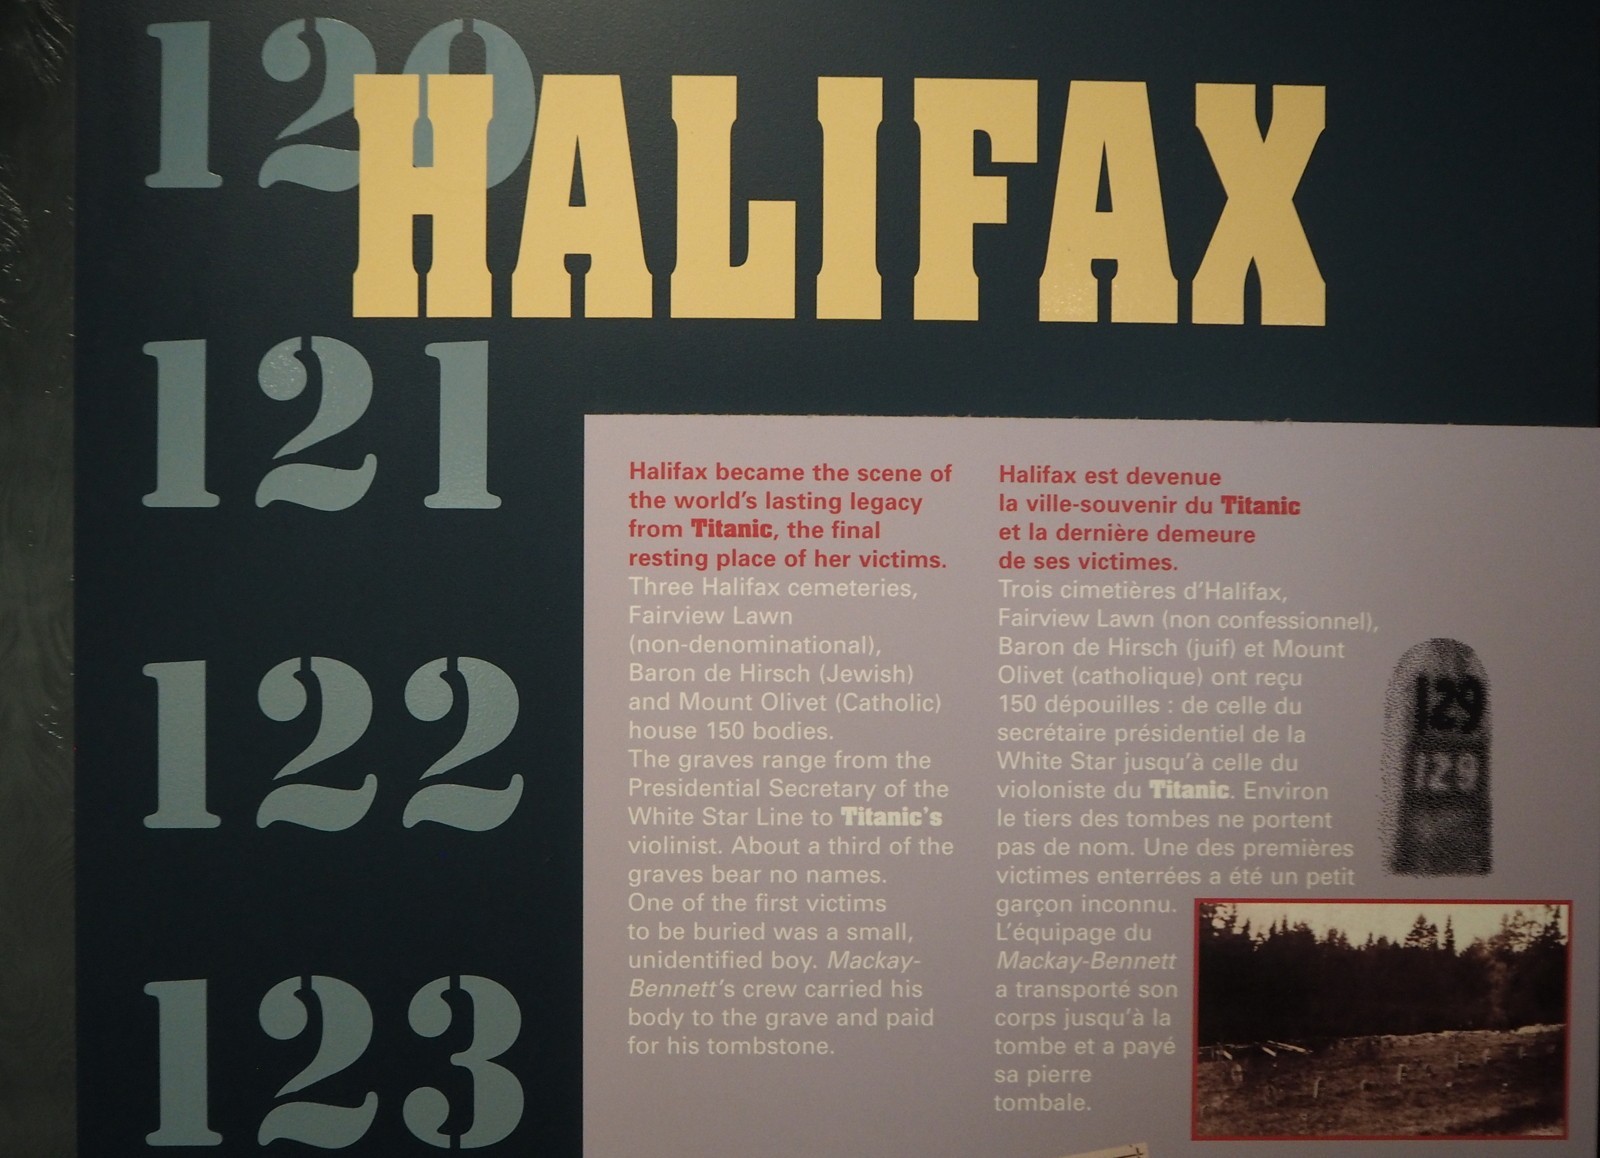 Maritime Museum of Atlantic Halifax